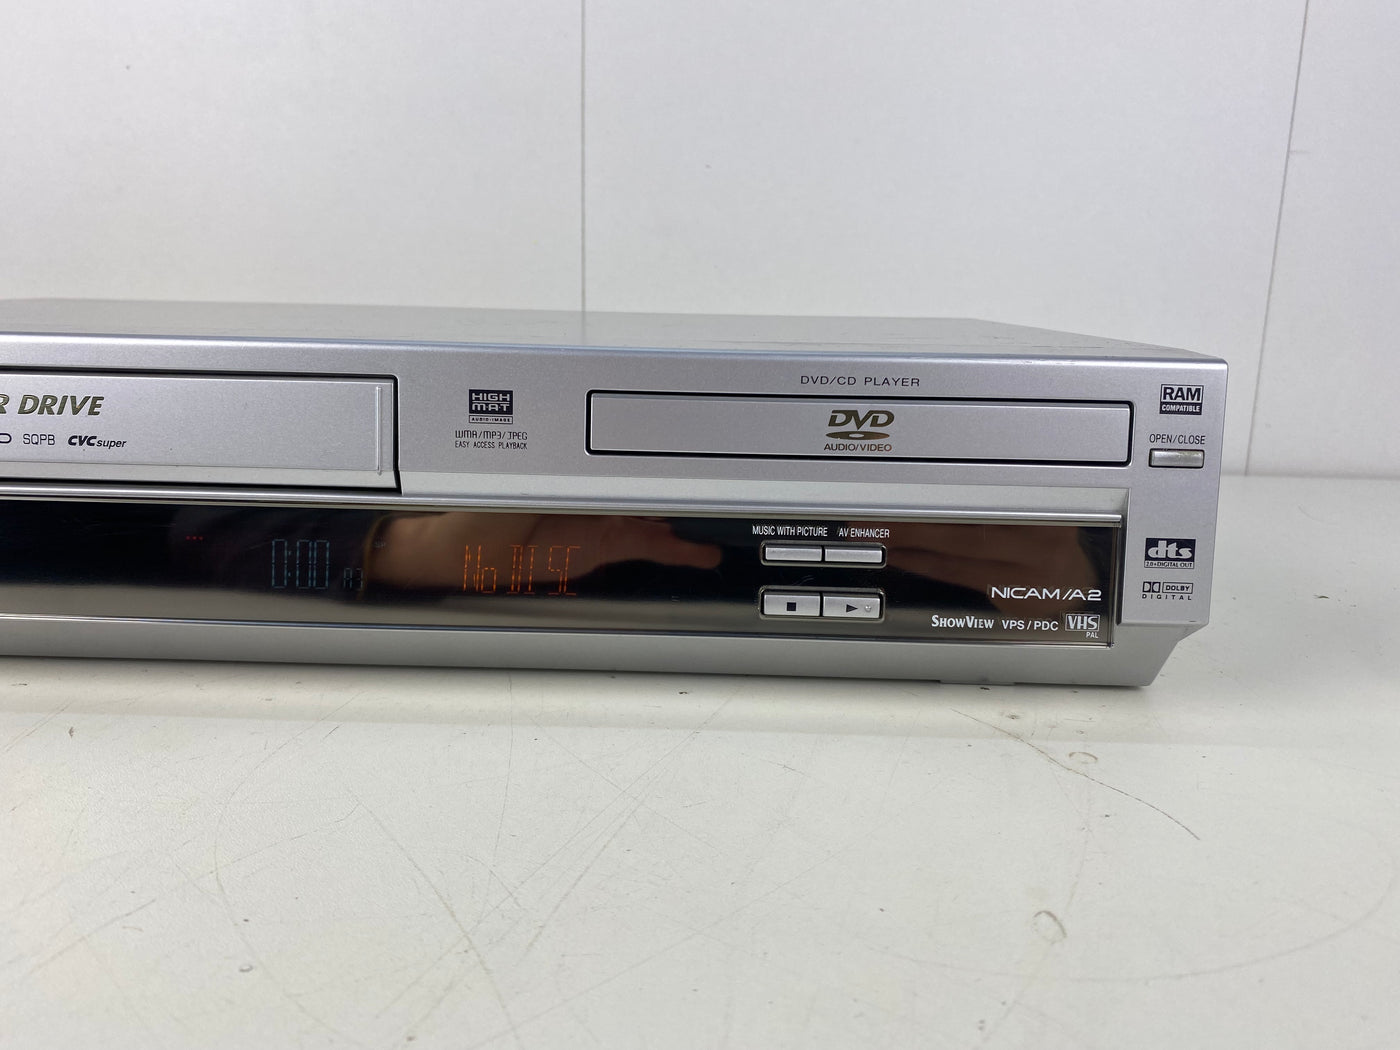 Panasonic NV-VP31 Super Drive Video Cassette Recorder DVD Combi | With Remote